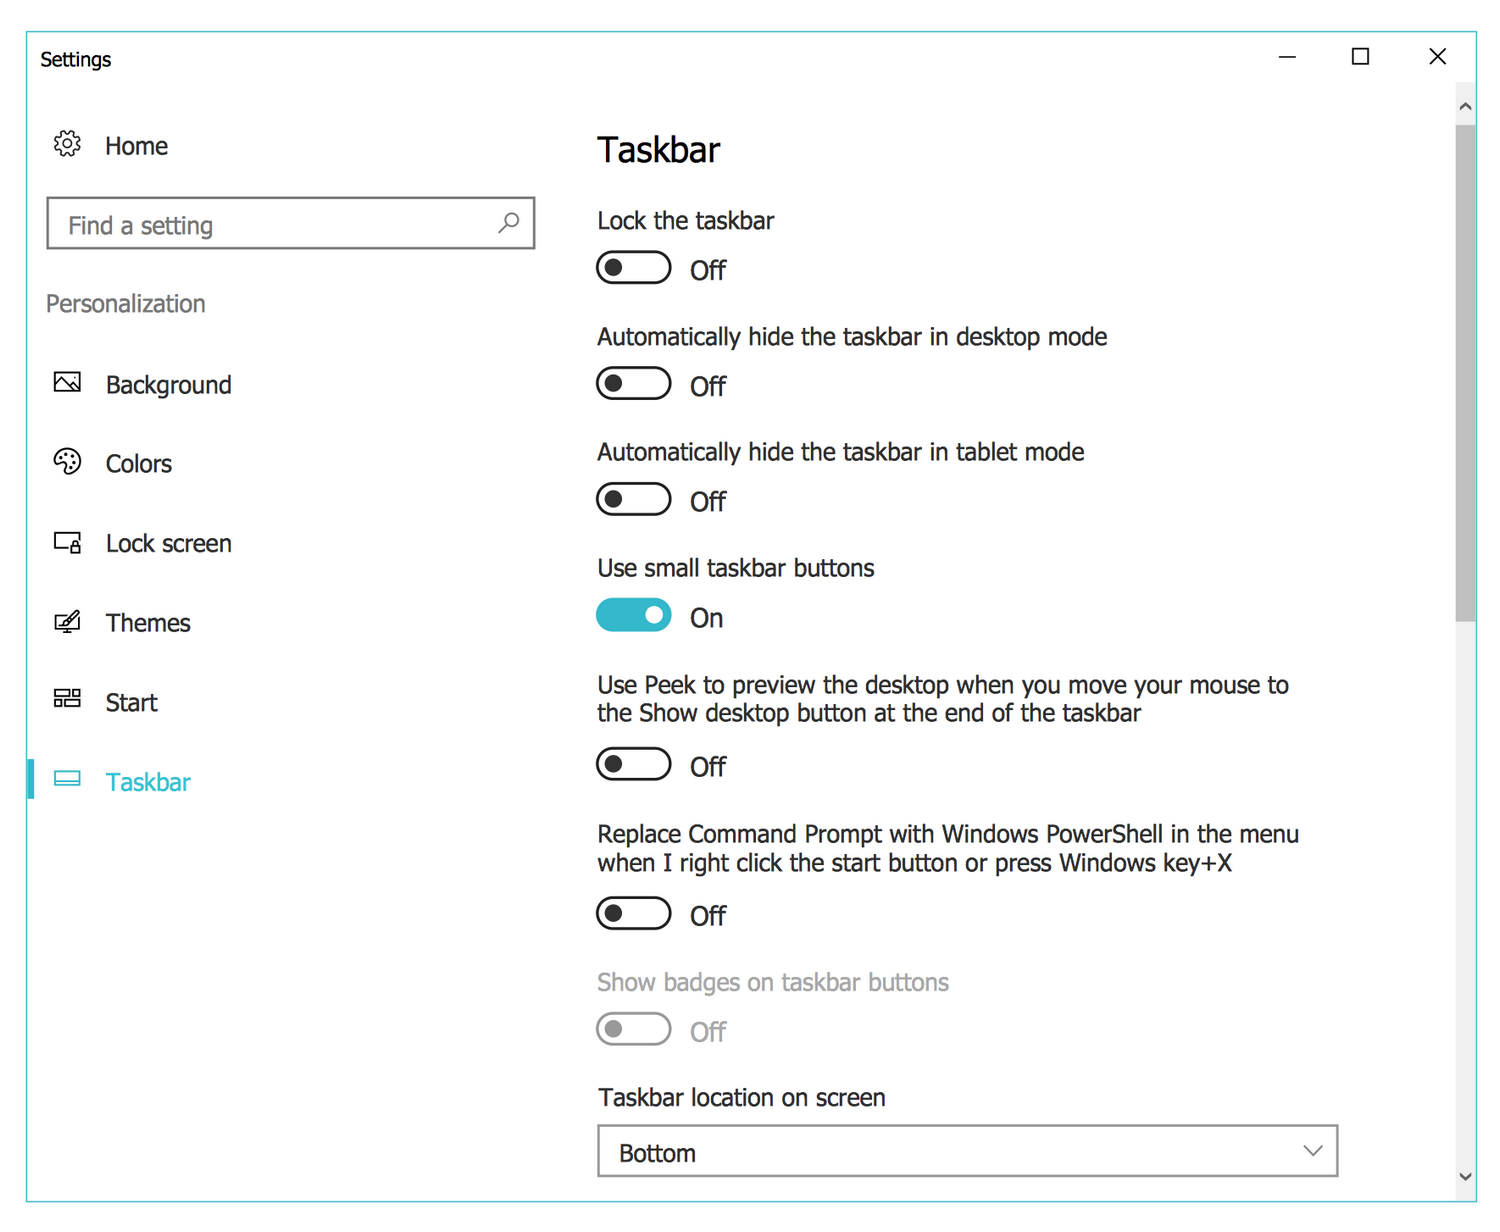 Windows 10 User Interface — Taskbar Settings